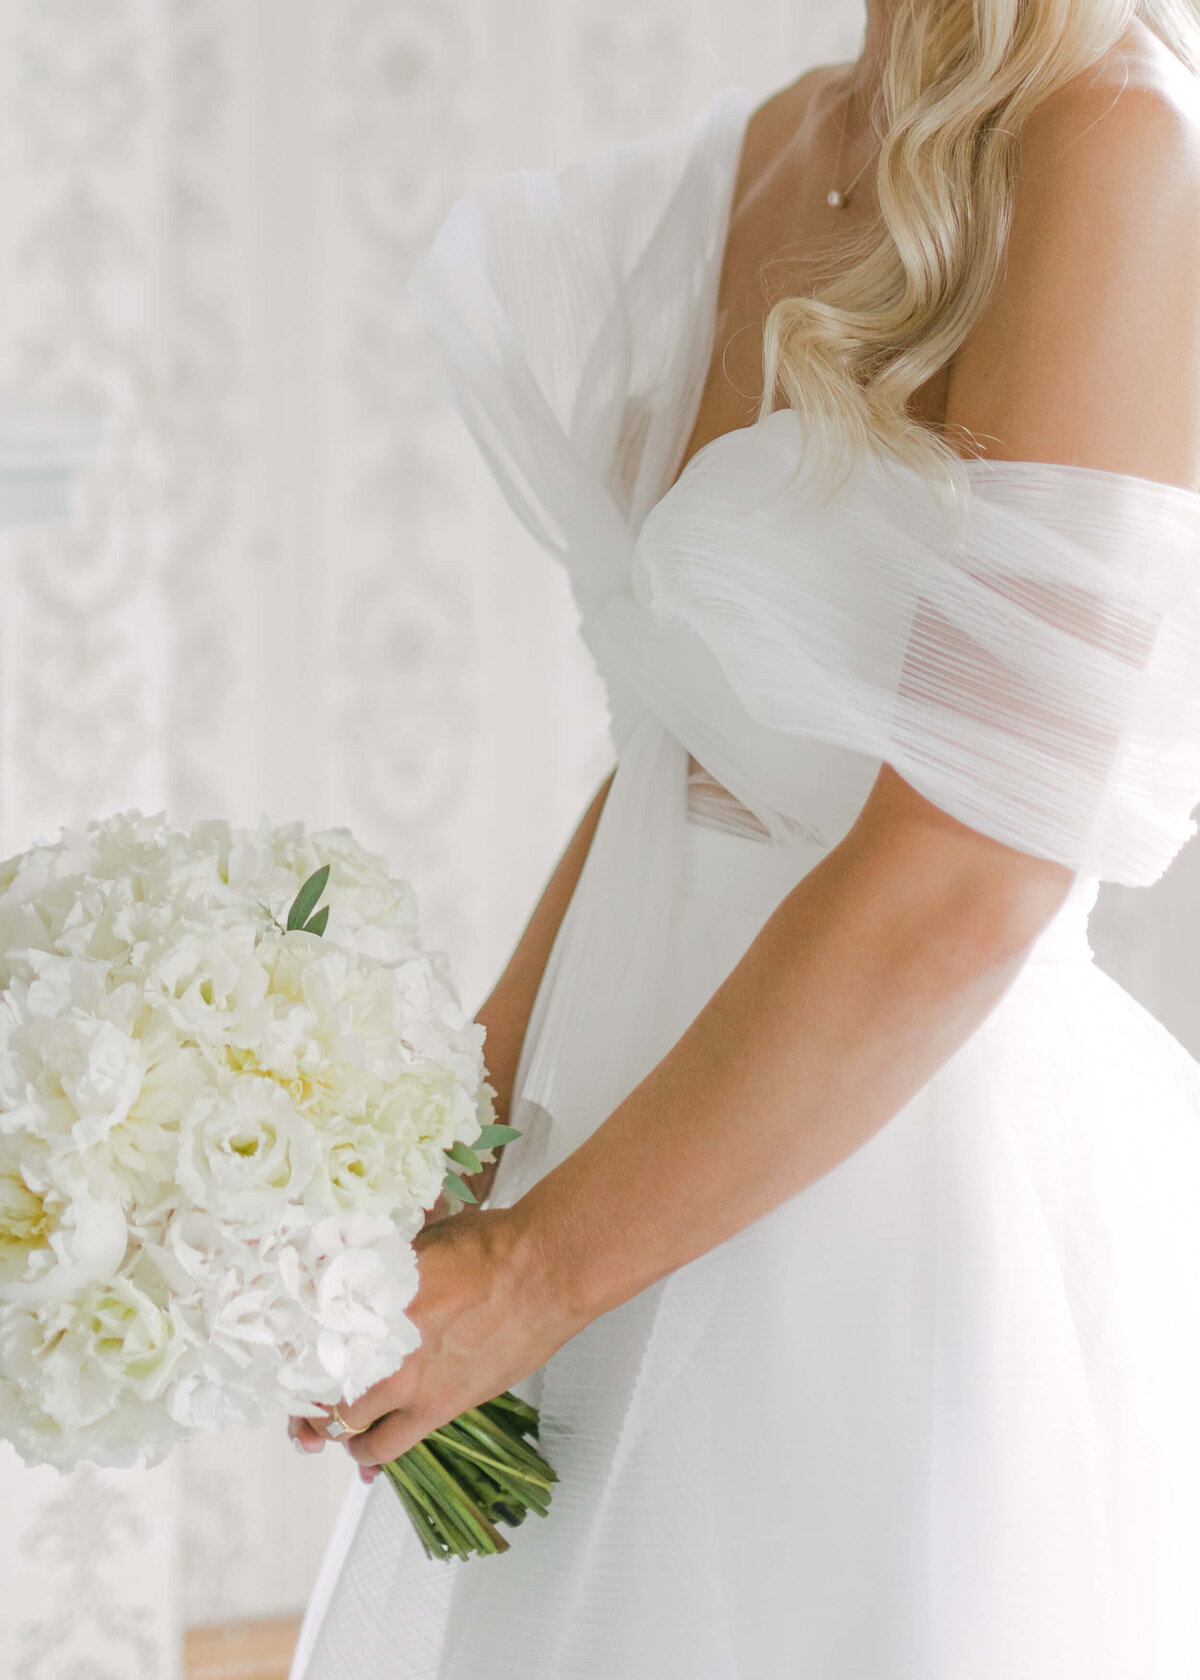 chloe-winstanley-weddings-newhite-bridal-white-ruffle-dress